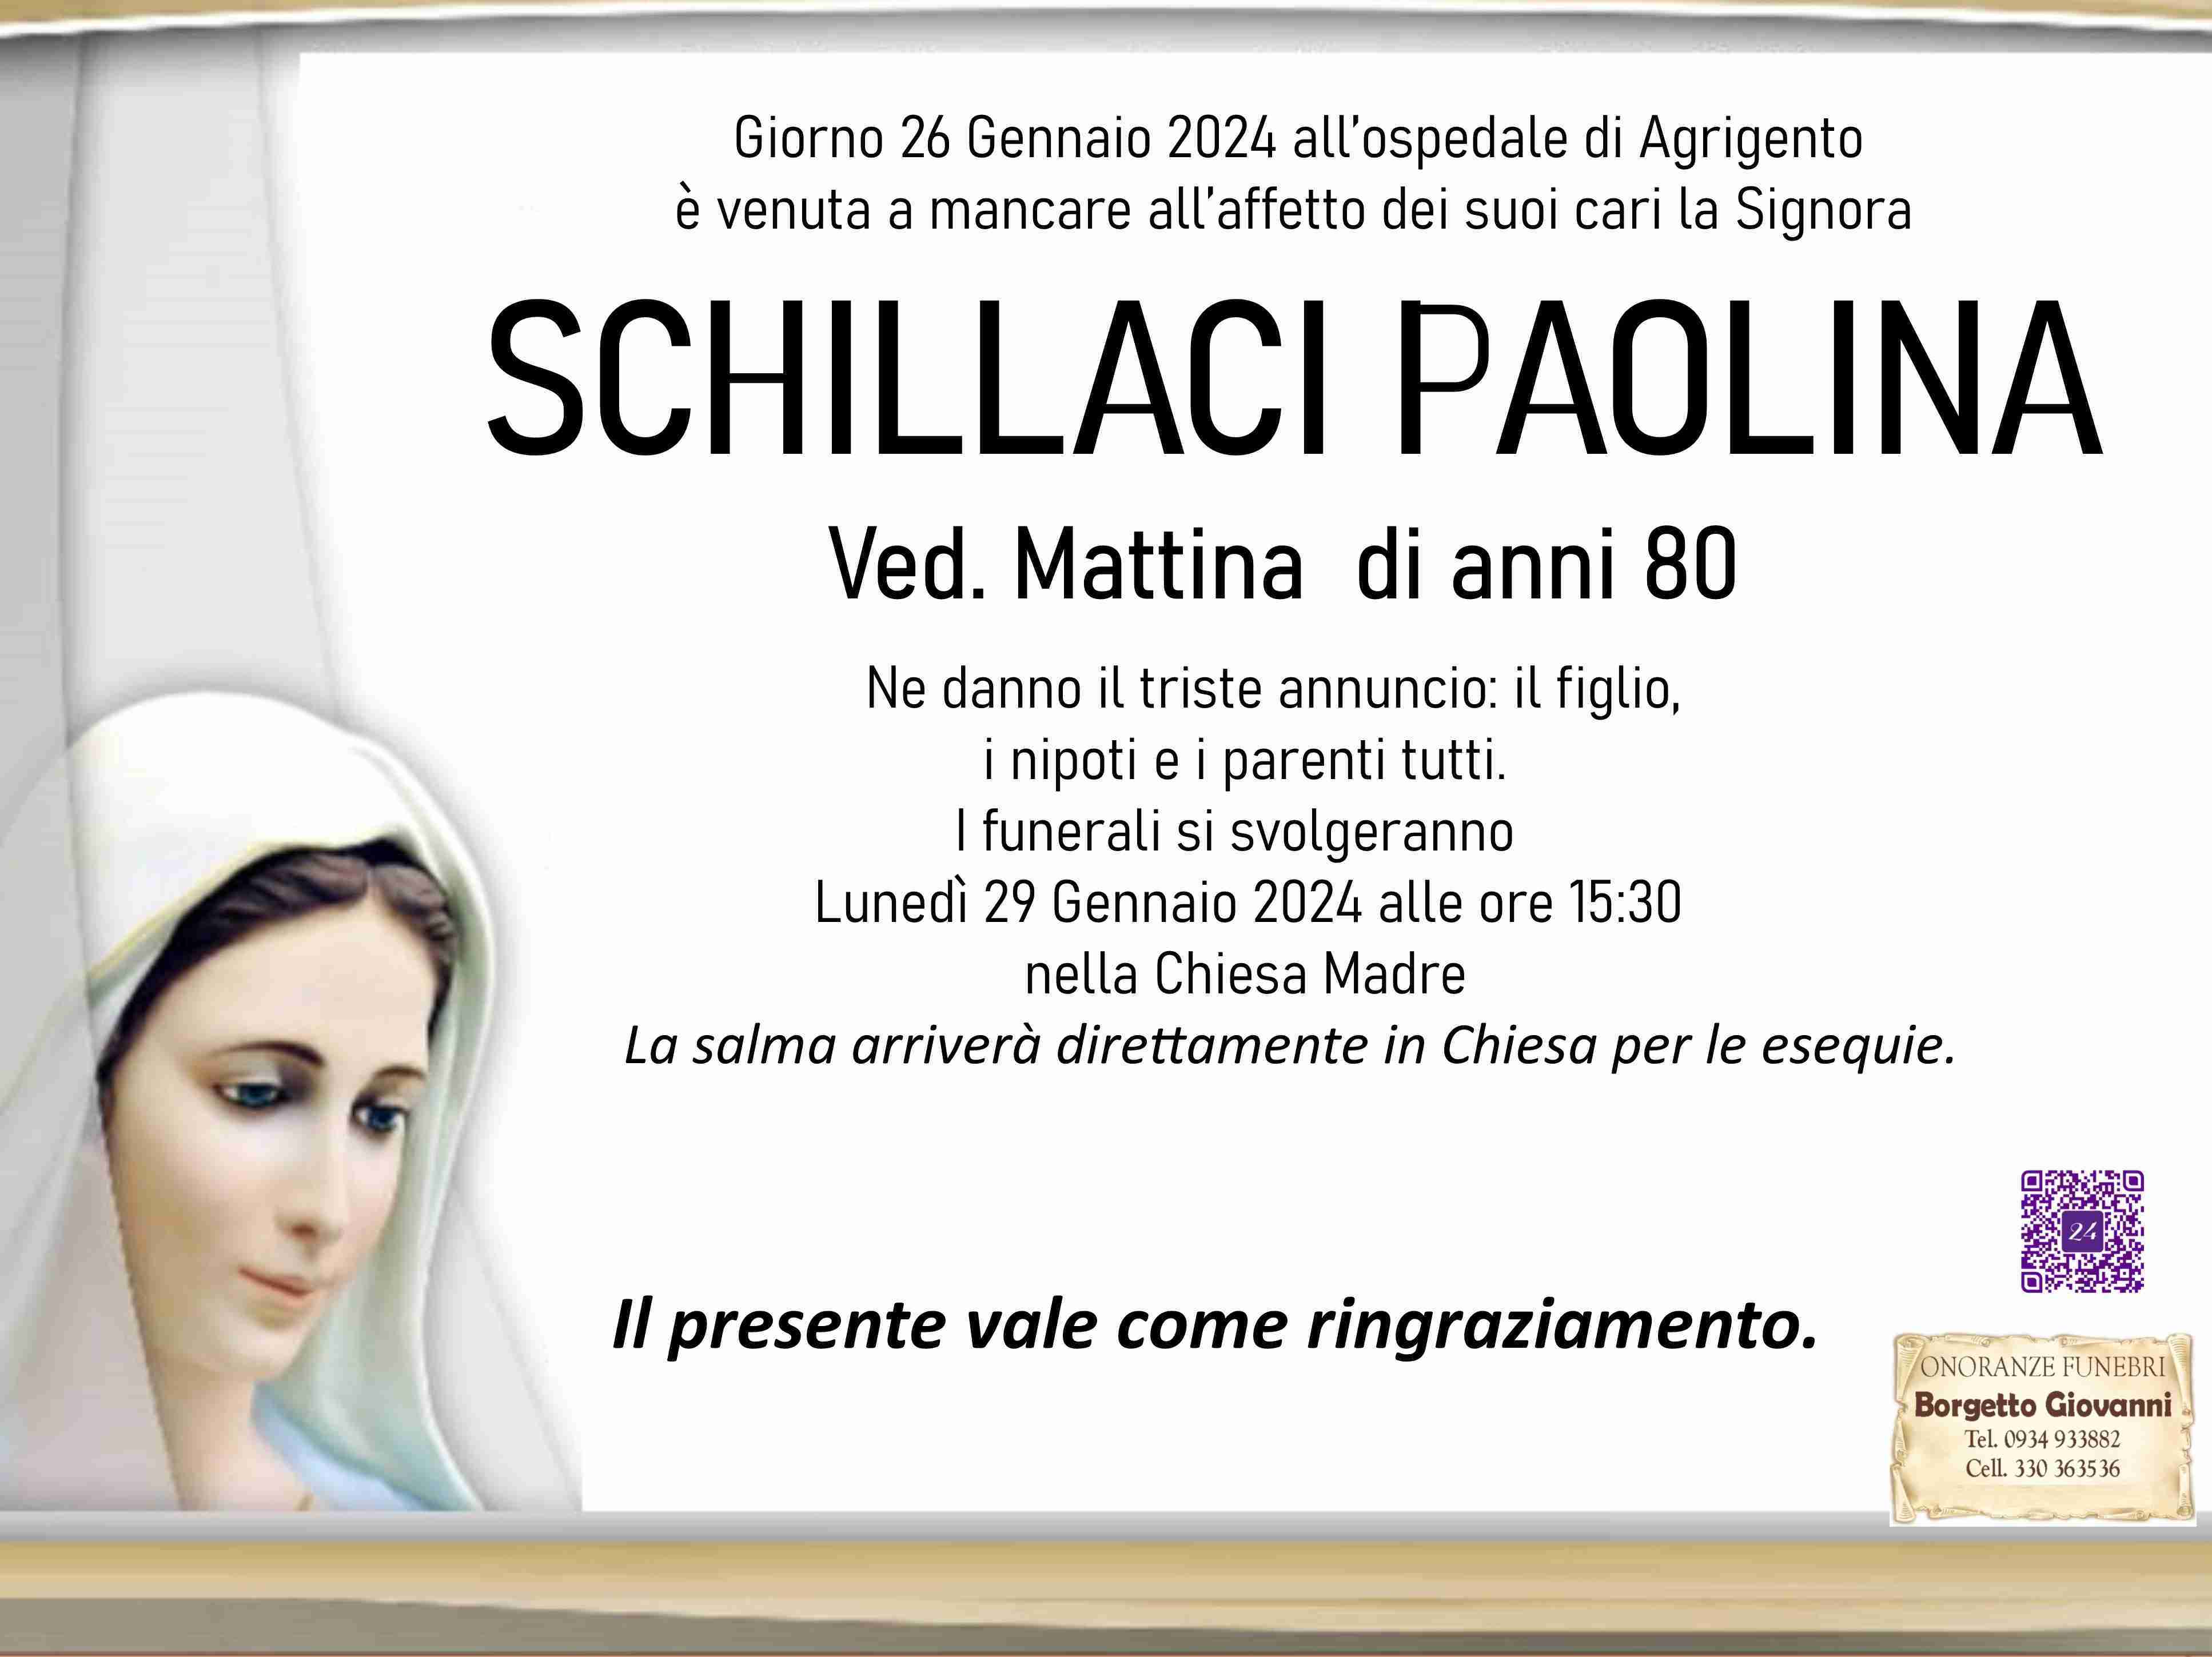 Paolina Schillaci